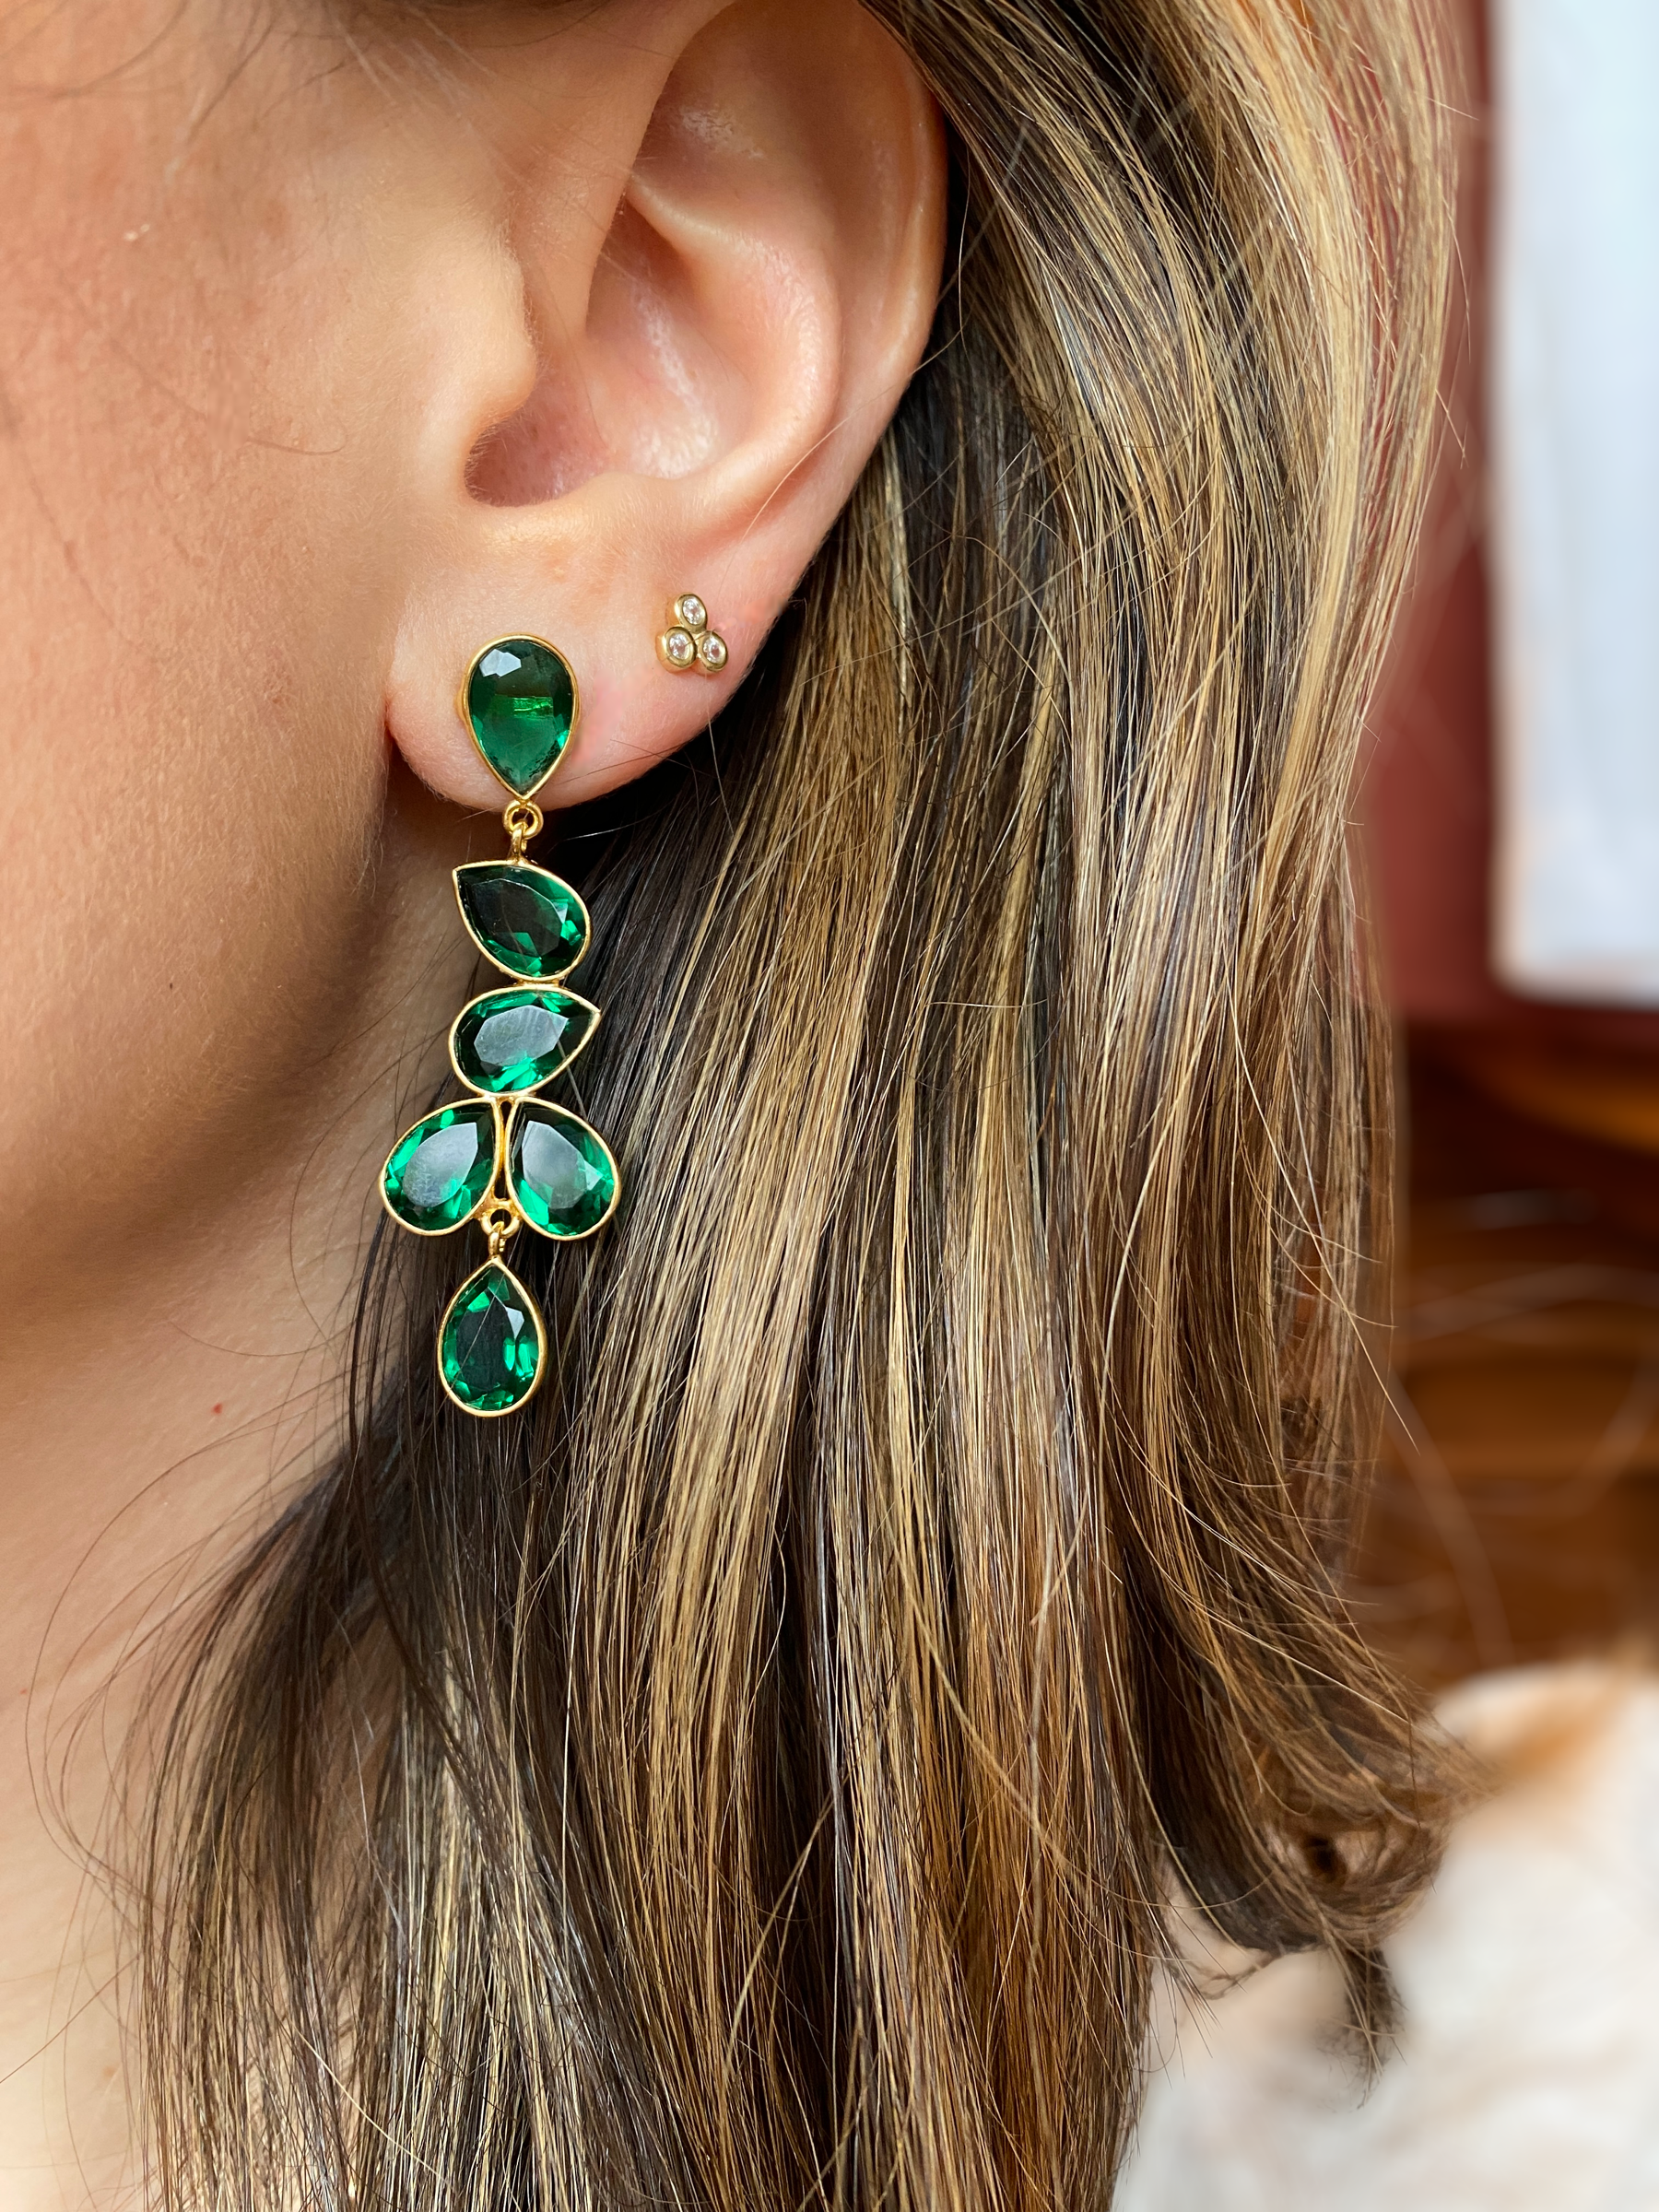 Stunning Gemstone Earrings